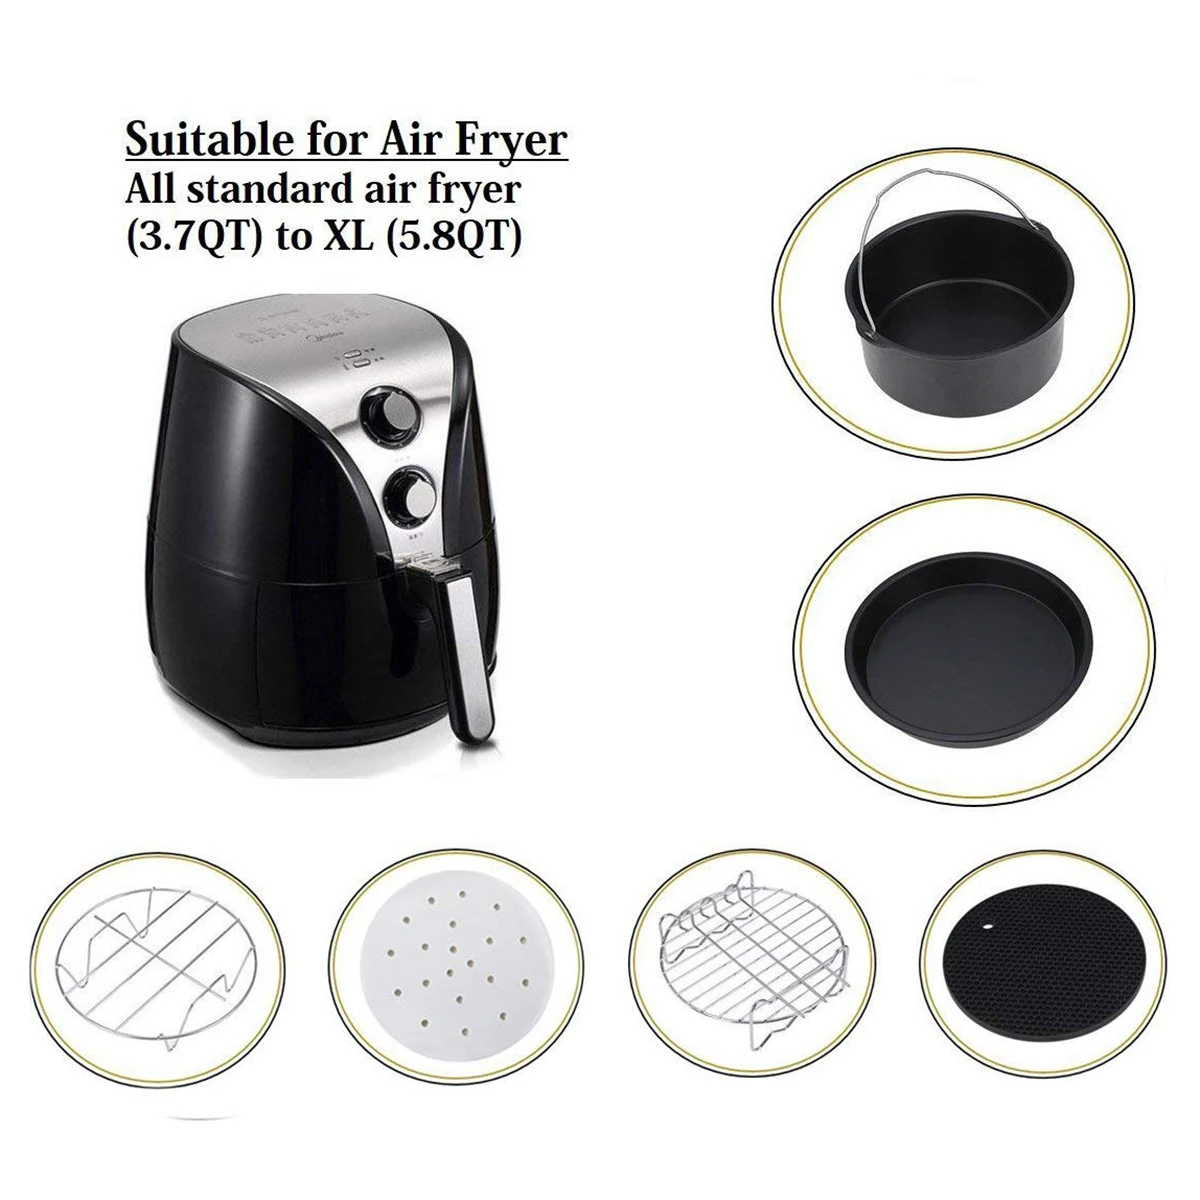 Air приборы для фритюрницы Air Фрайер набор для Phillips Cozyna воздуха Фрайер и Gowise воздуха Фрайер подходит для всех 3.7QT-5.3QT-5.8QT 100 шт Нет